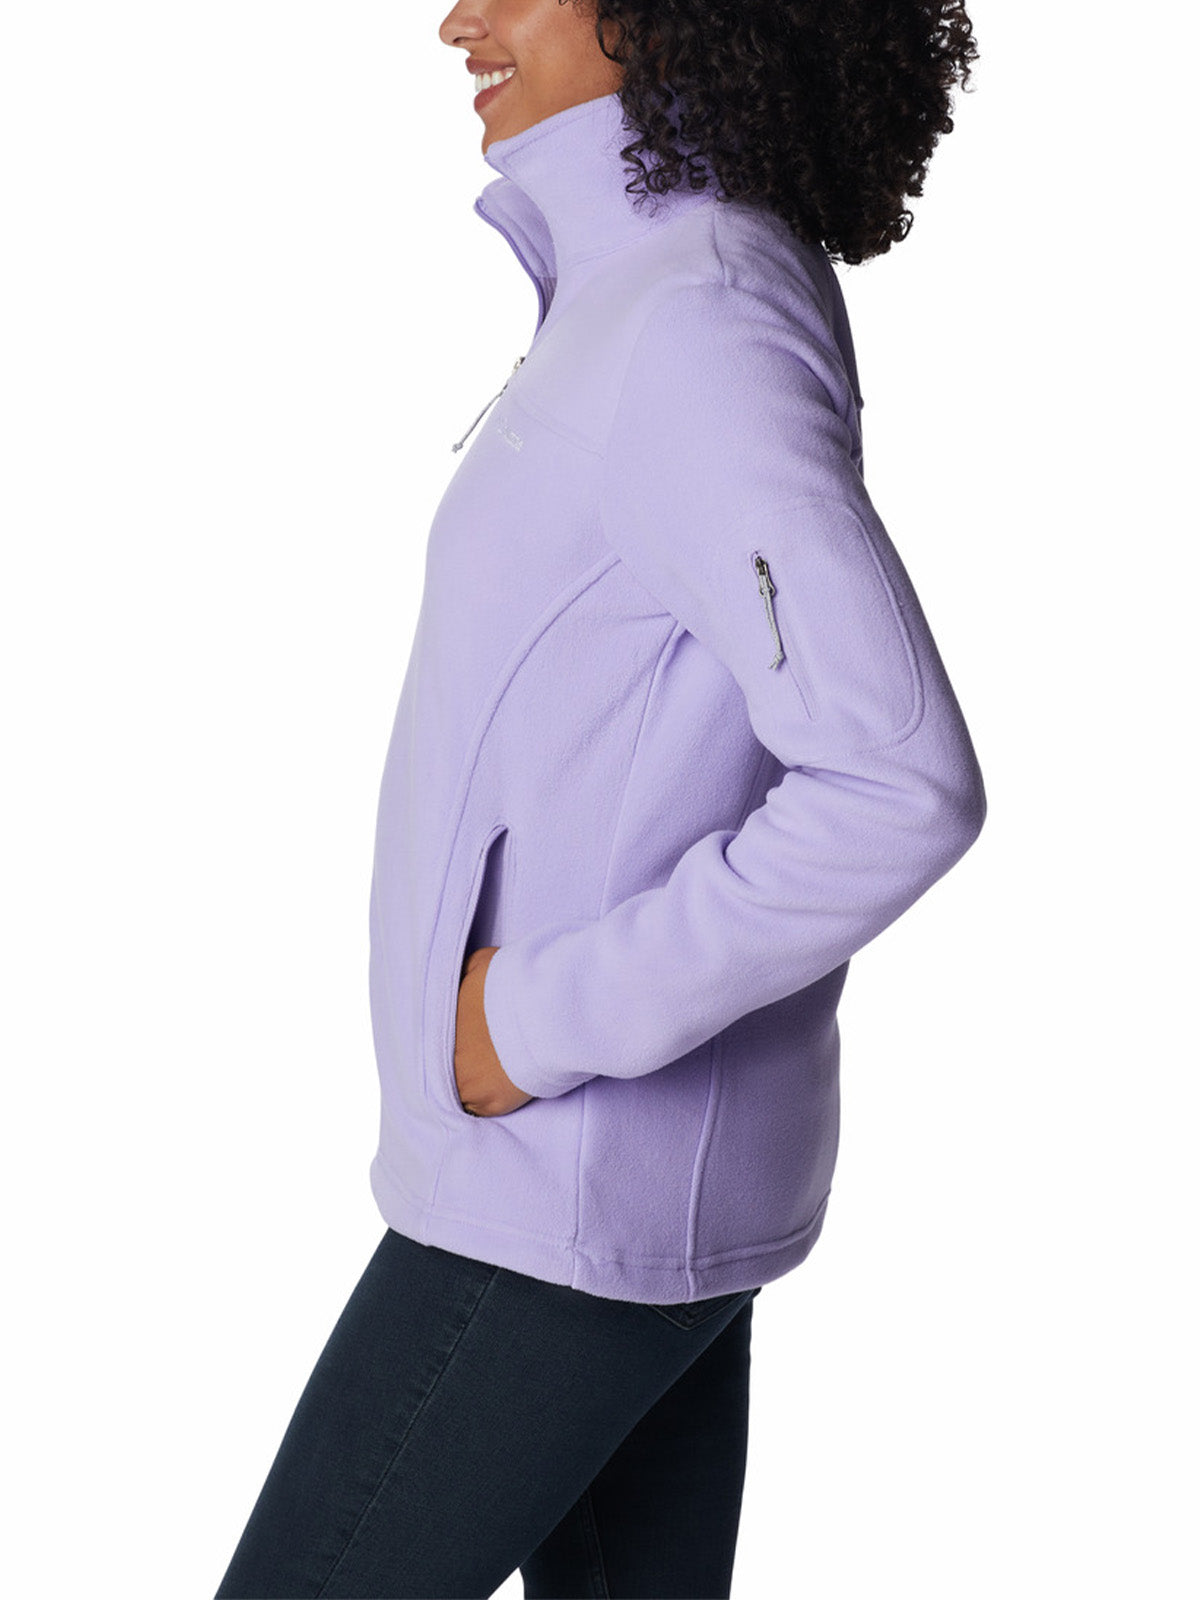 Women’s Fast Trek™ II Fleece Jacket